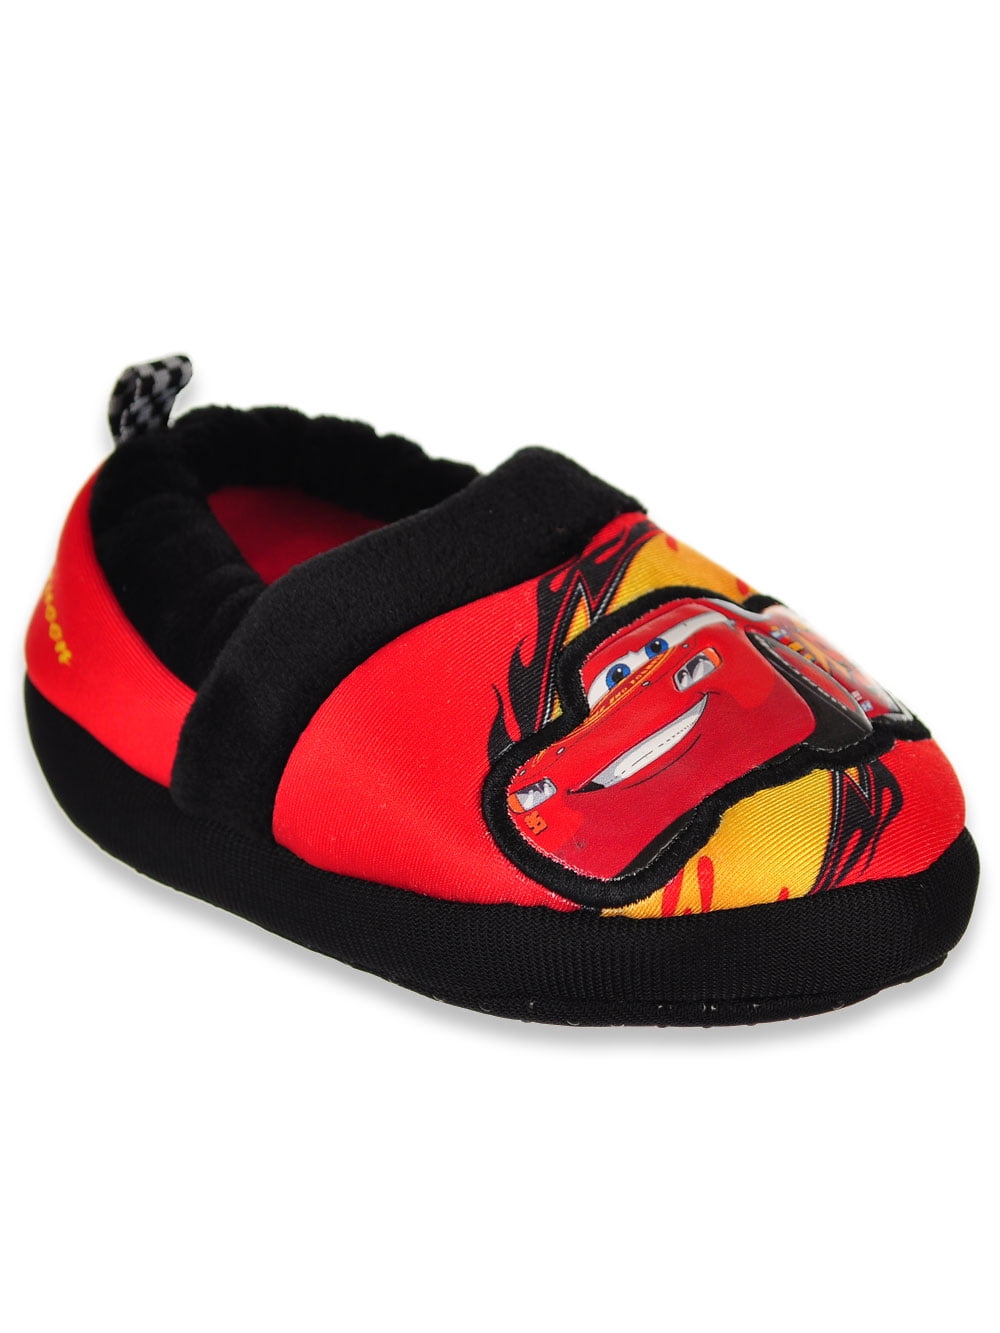 lightning mcqueen slippers size 8